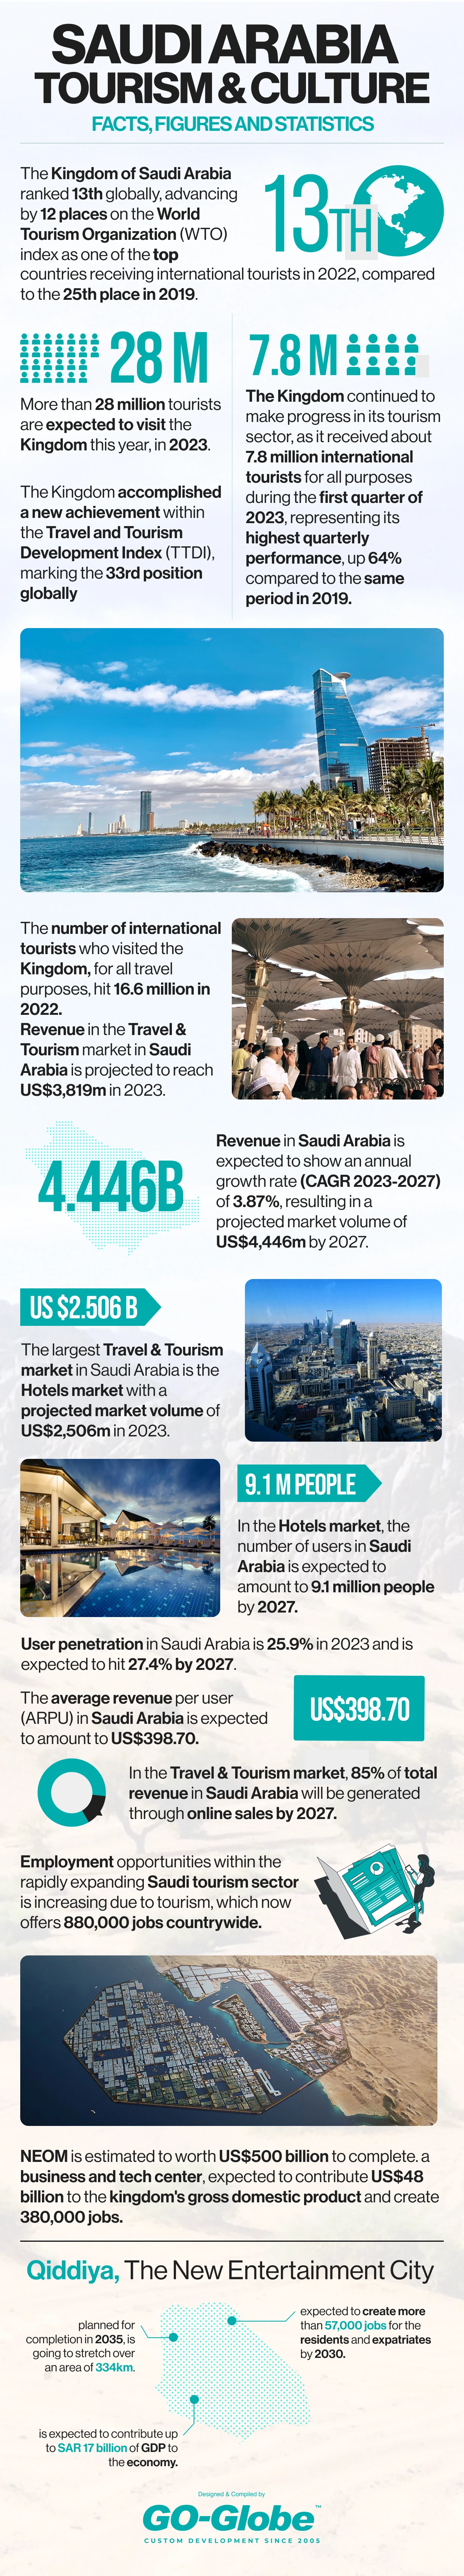 saudia_arabia_tourism